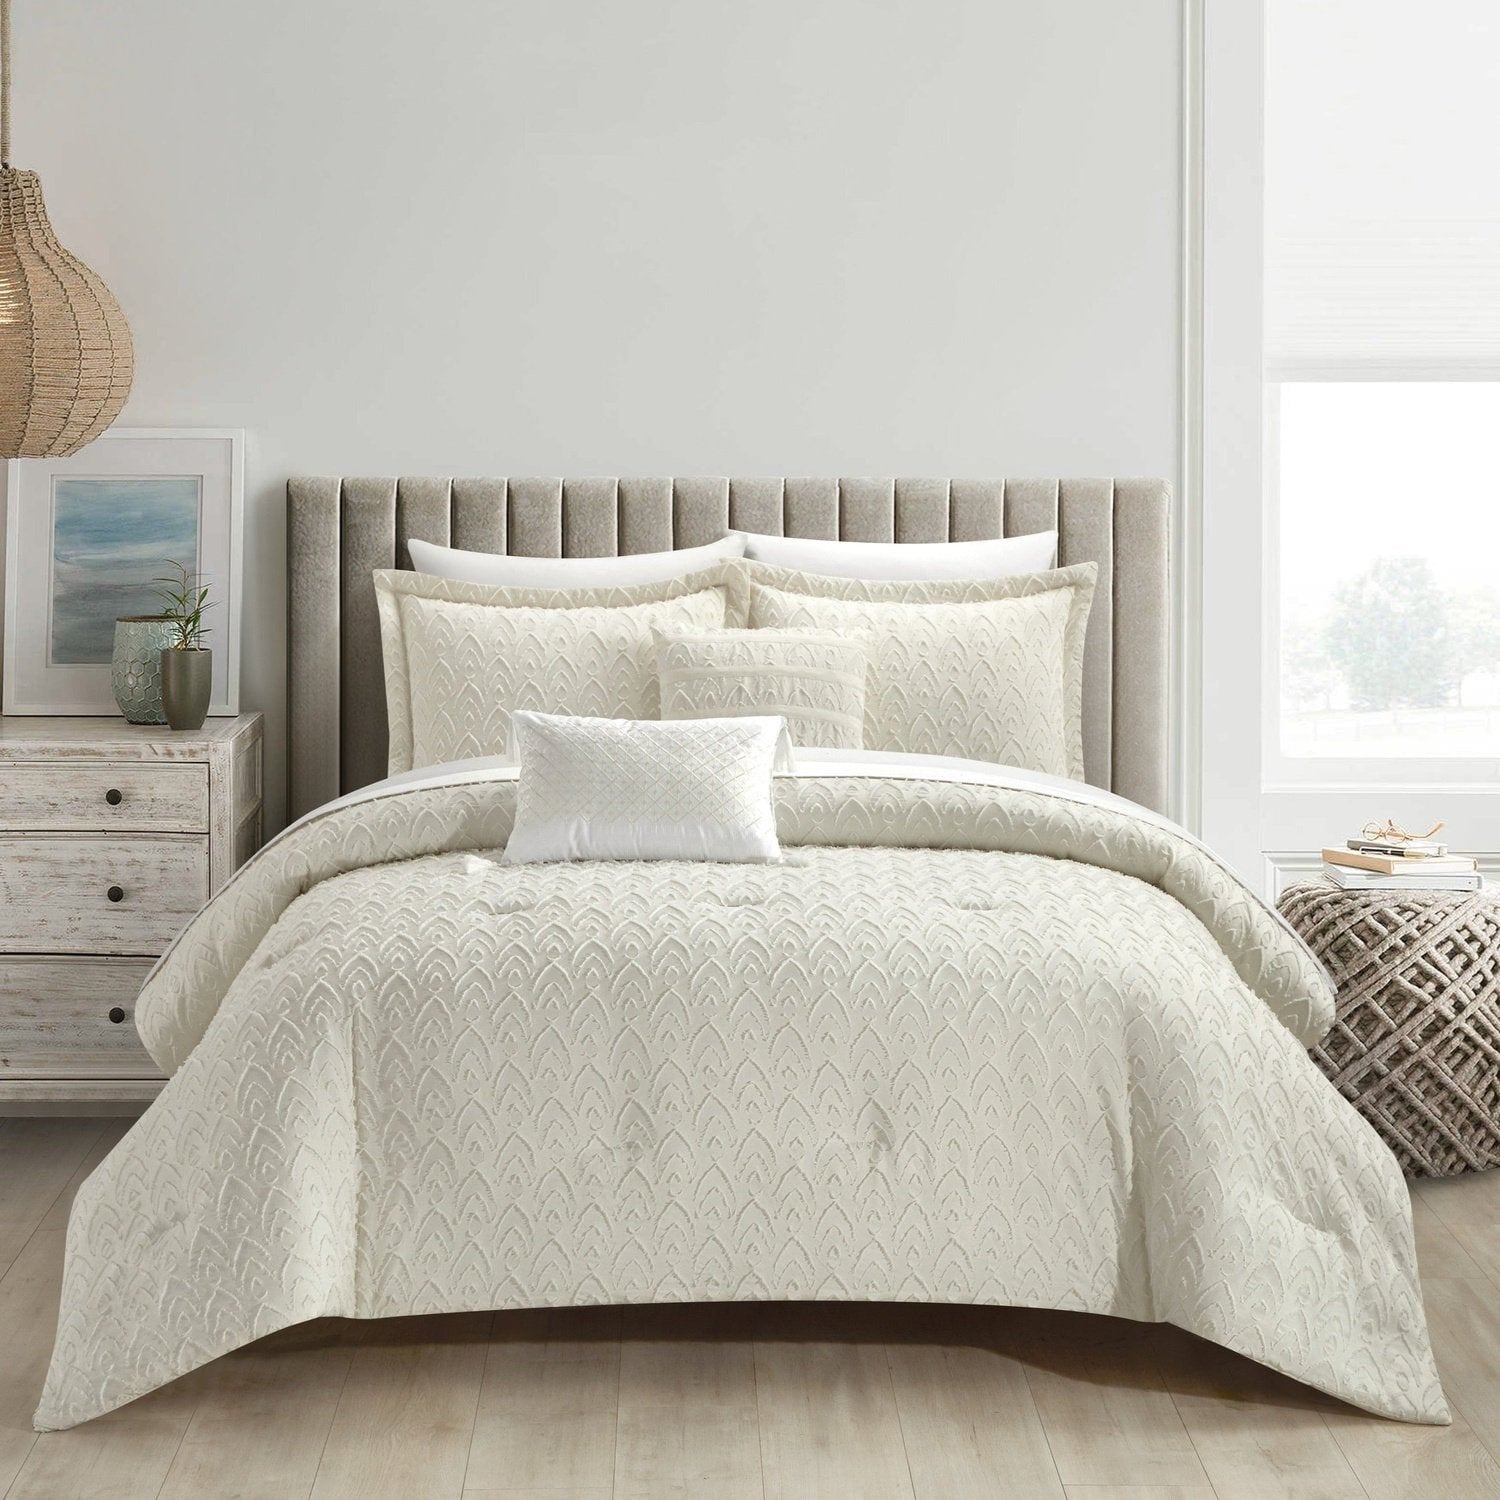 Chic Home Reign 5 Piece Comforter Set Jacquard Geometric Pattern Bedding